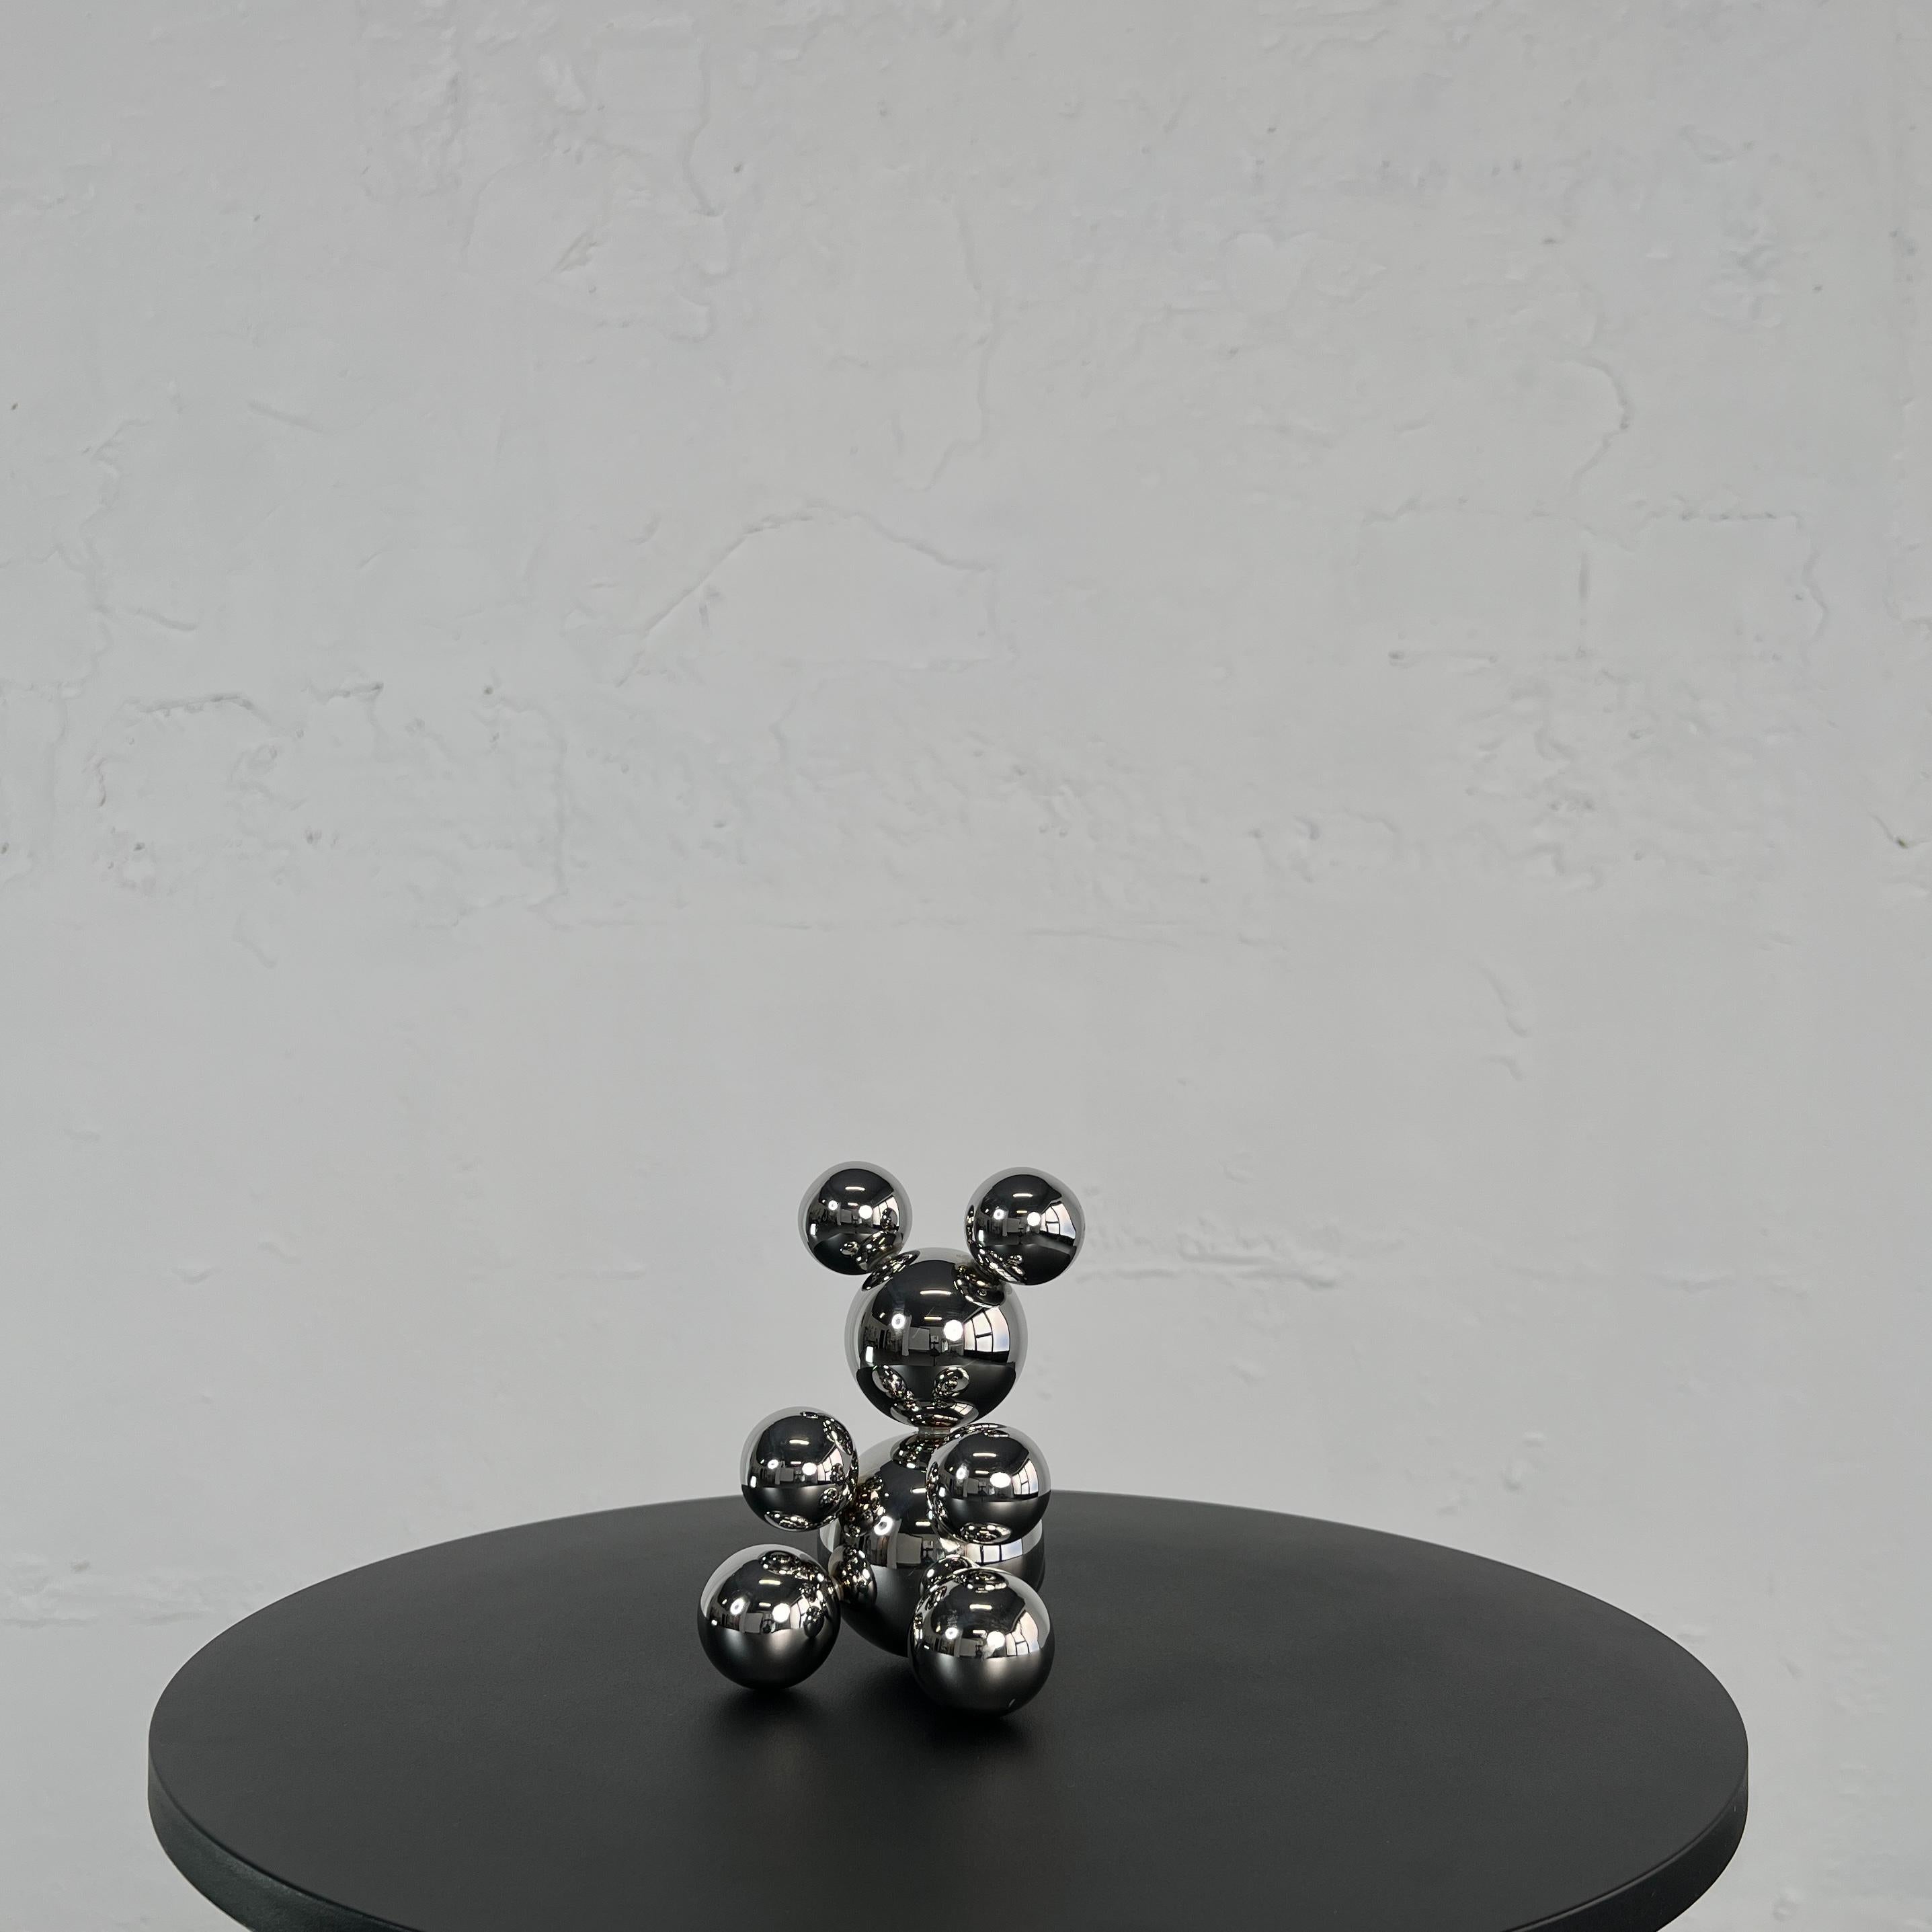 IRENA TONE Figurative Sculpture - Tiny Stainless Steel Bear 'Ricky' Sculpture Minimalistic Animal